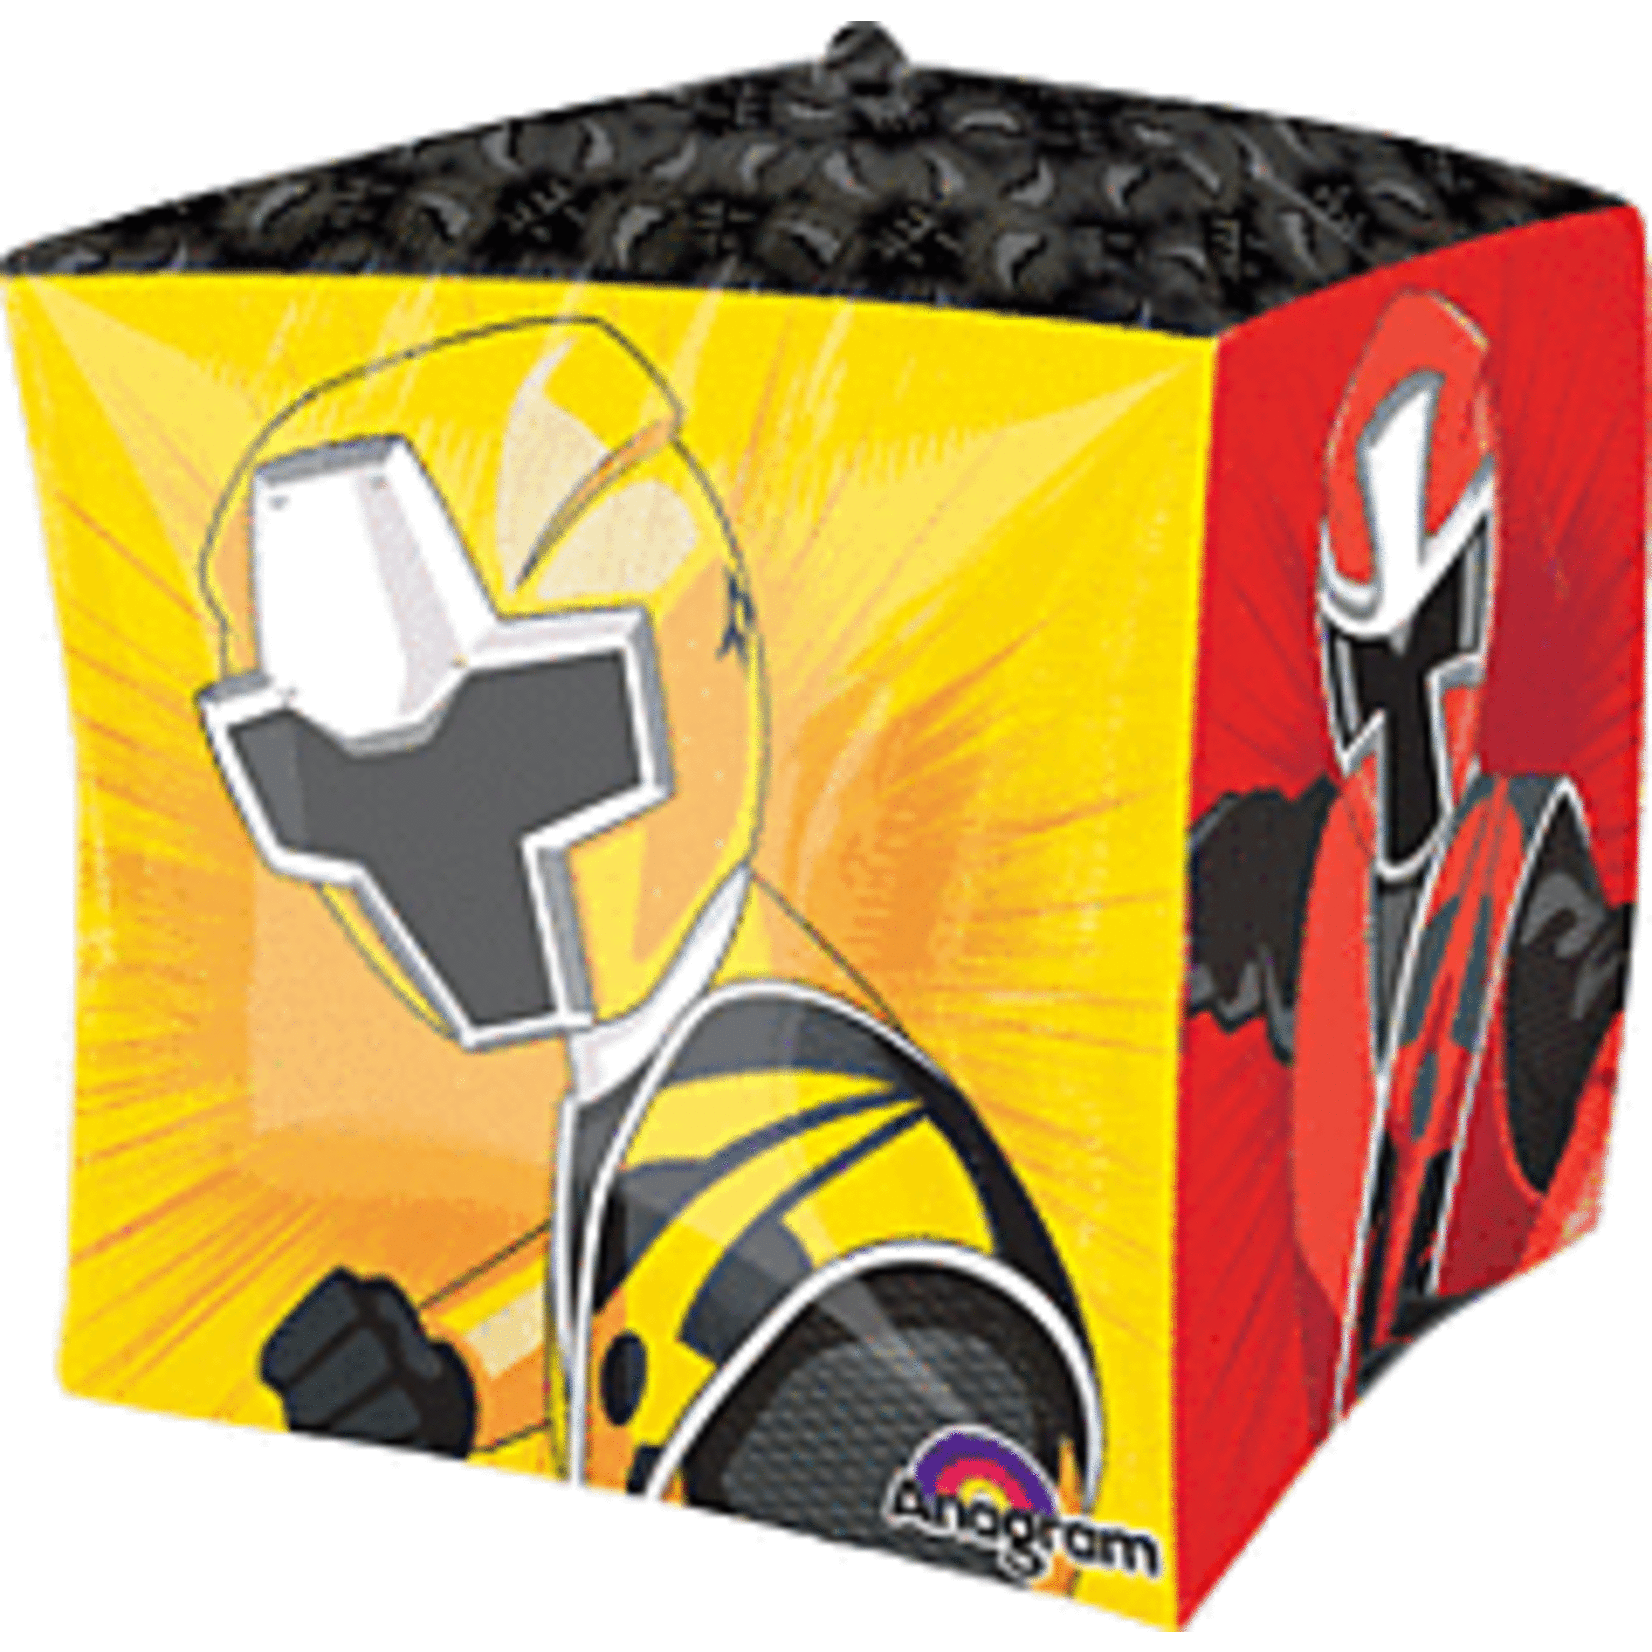 15" Power Ranger Ninja Cubez